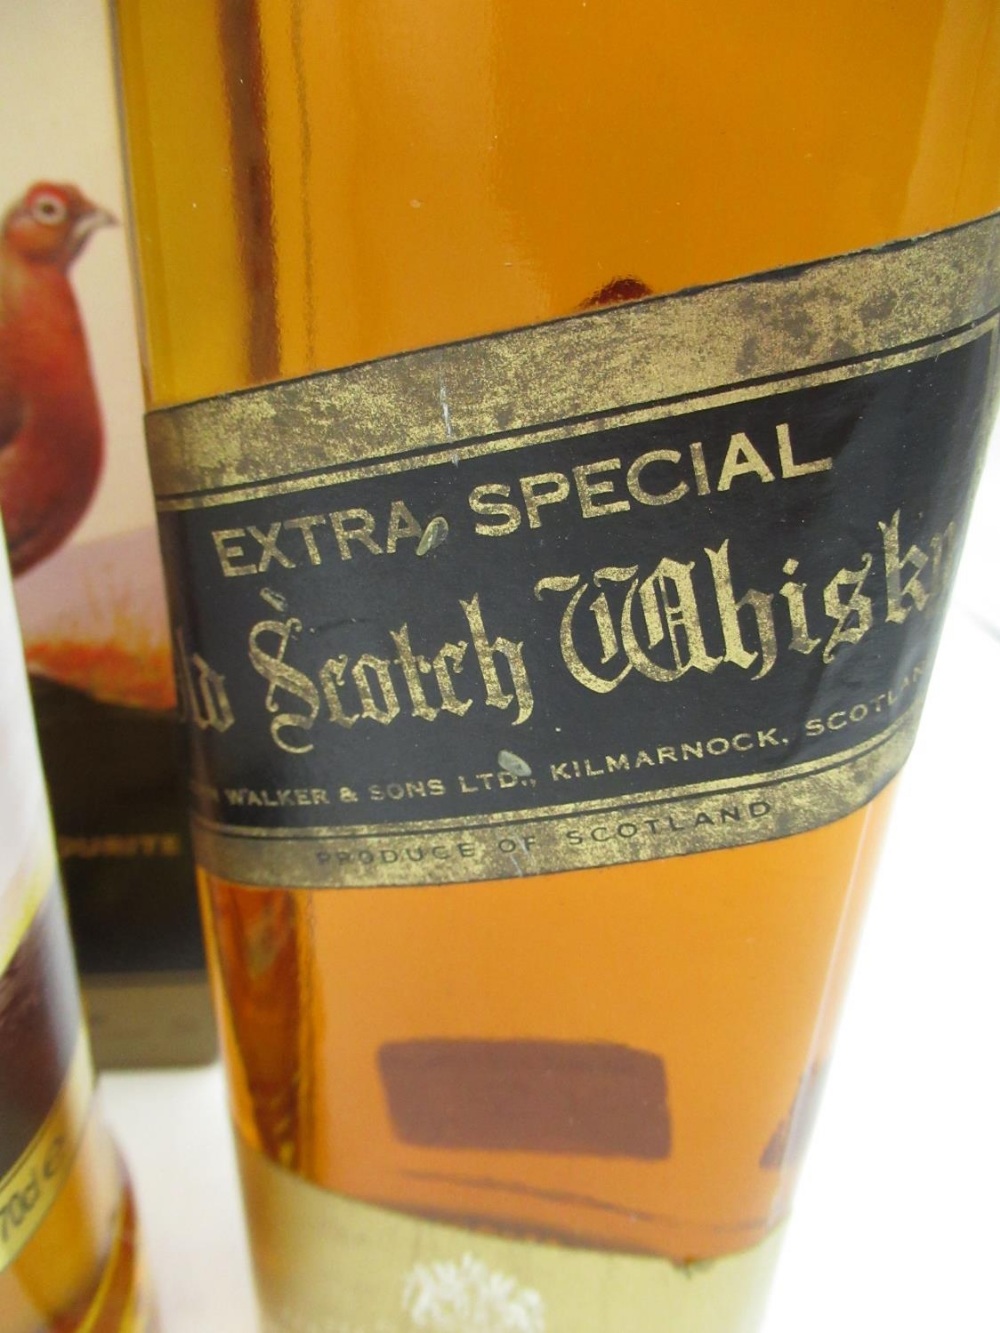 Johnnie Walker Black Label Old Scotch Whisky, Distilled and bottled in Scotland under British - Image 4 of 4